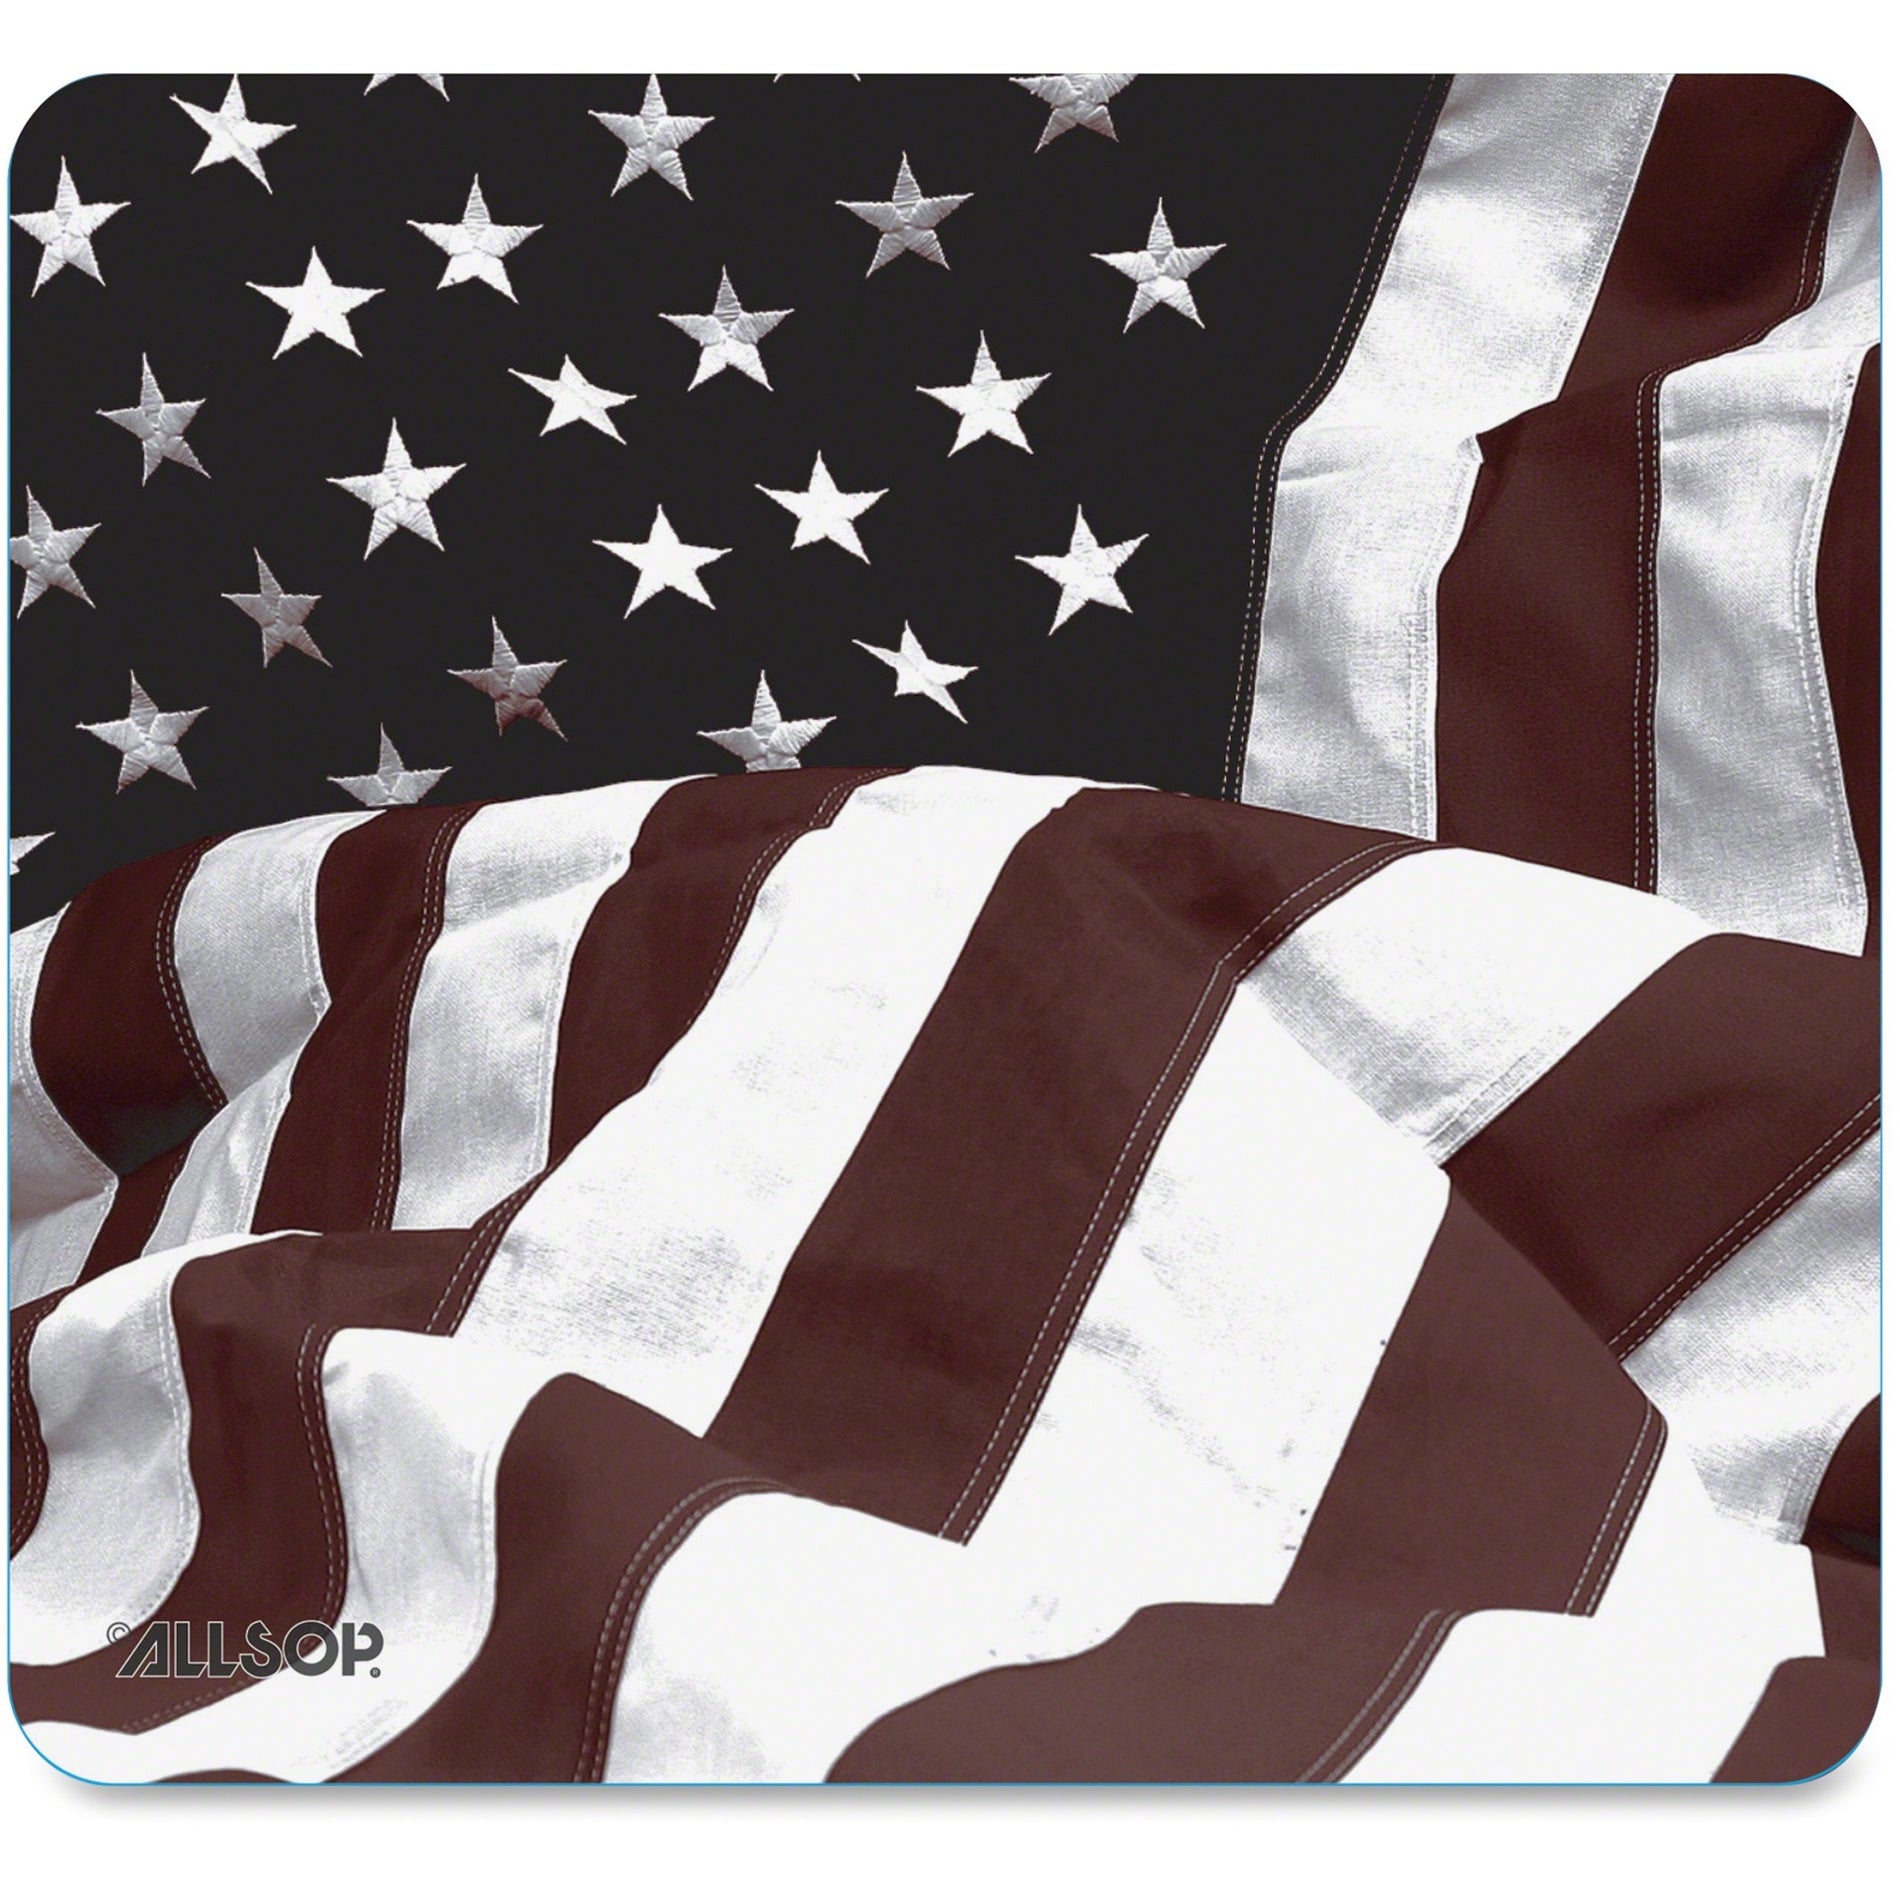 Allsop 29302 NatureSmart Bild Mauspad - Amerikanische Flagge